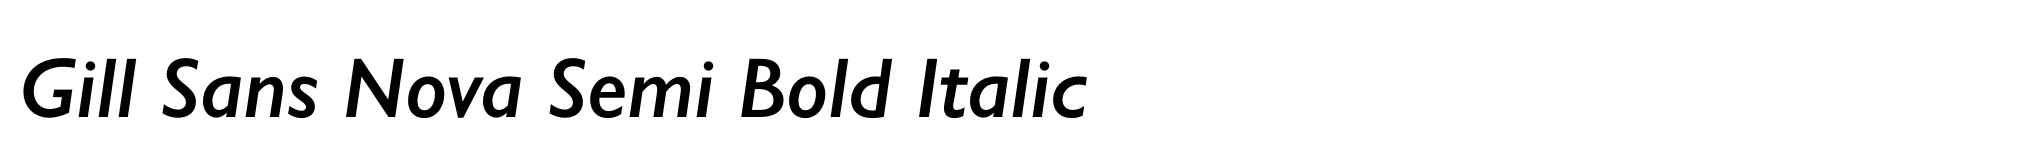 Gill Sans Nova Semi Bold Italic image